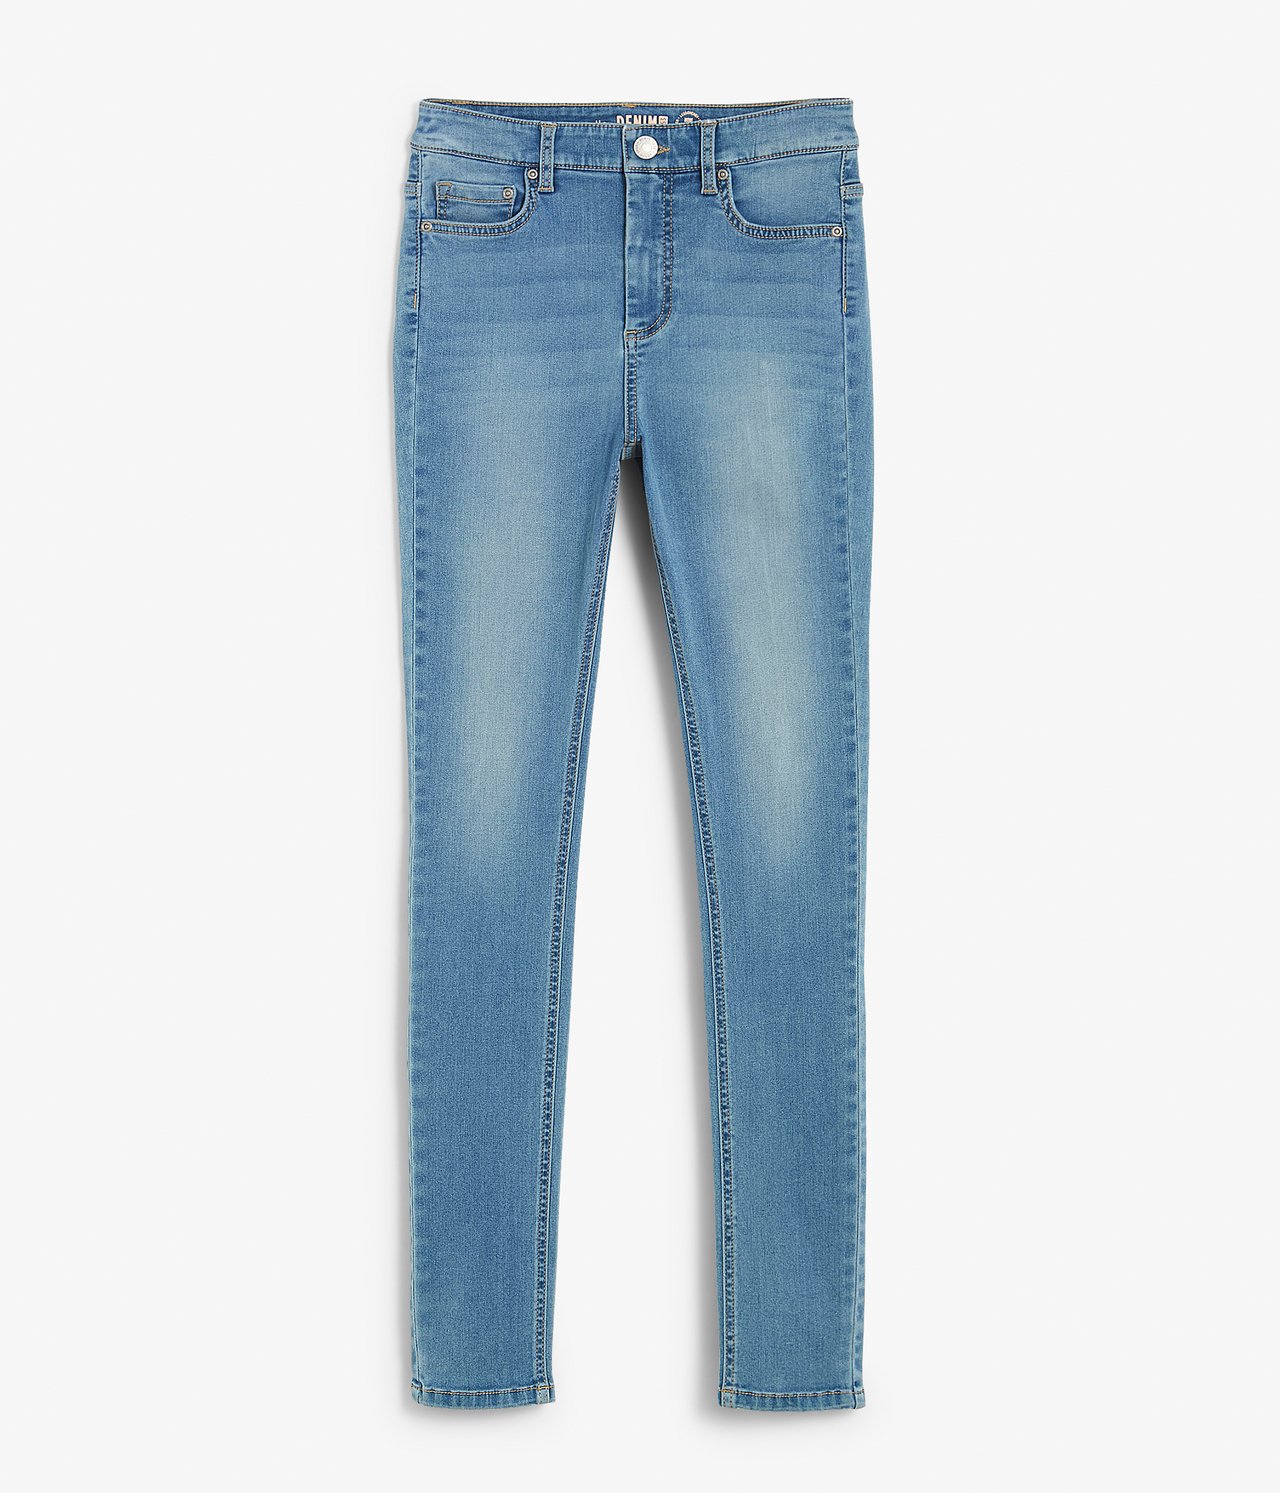 Super slim jeans short leg - Denimi - 9